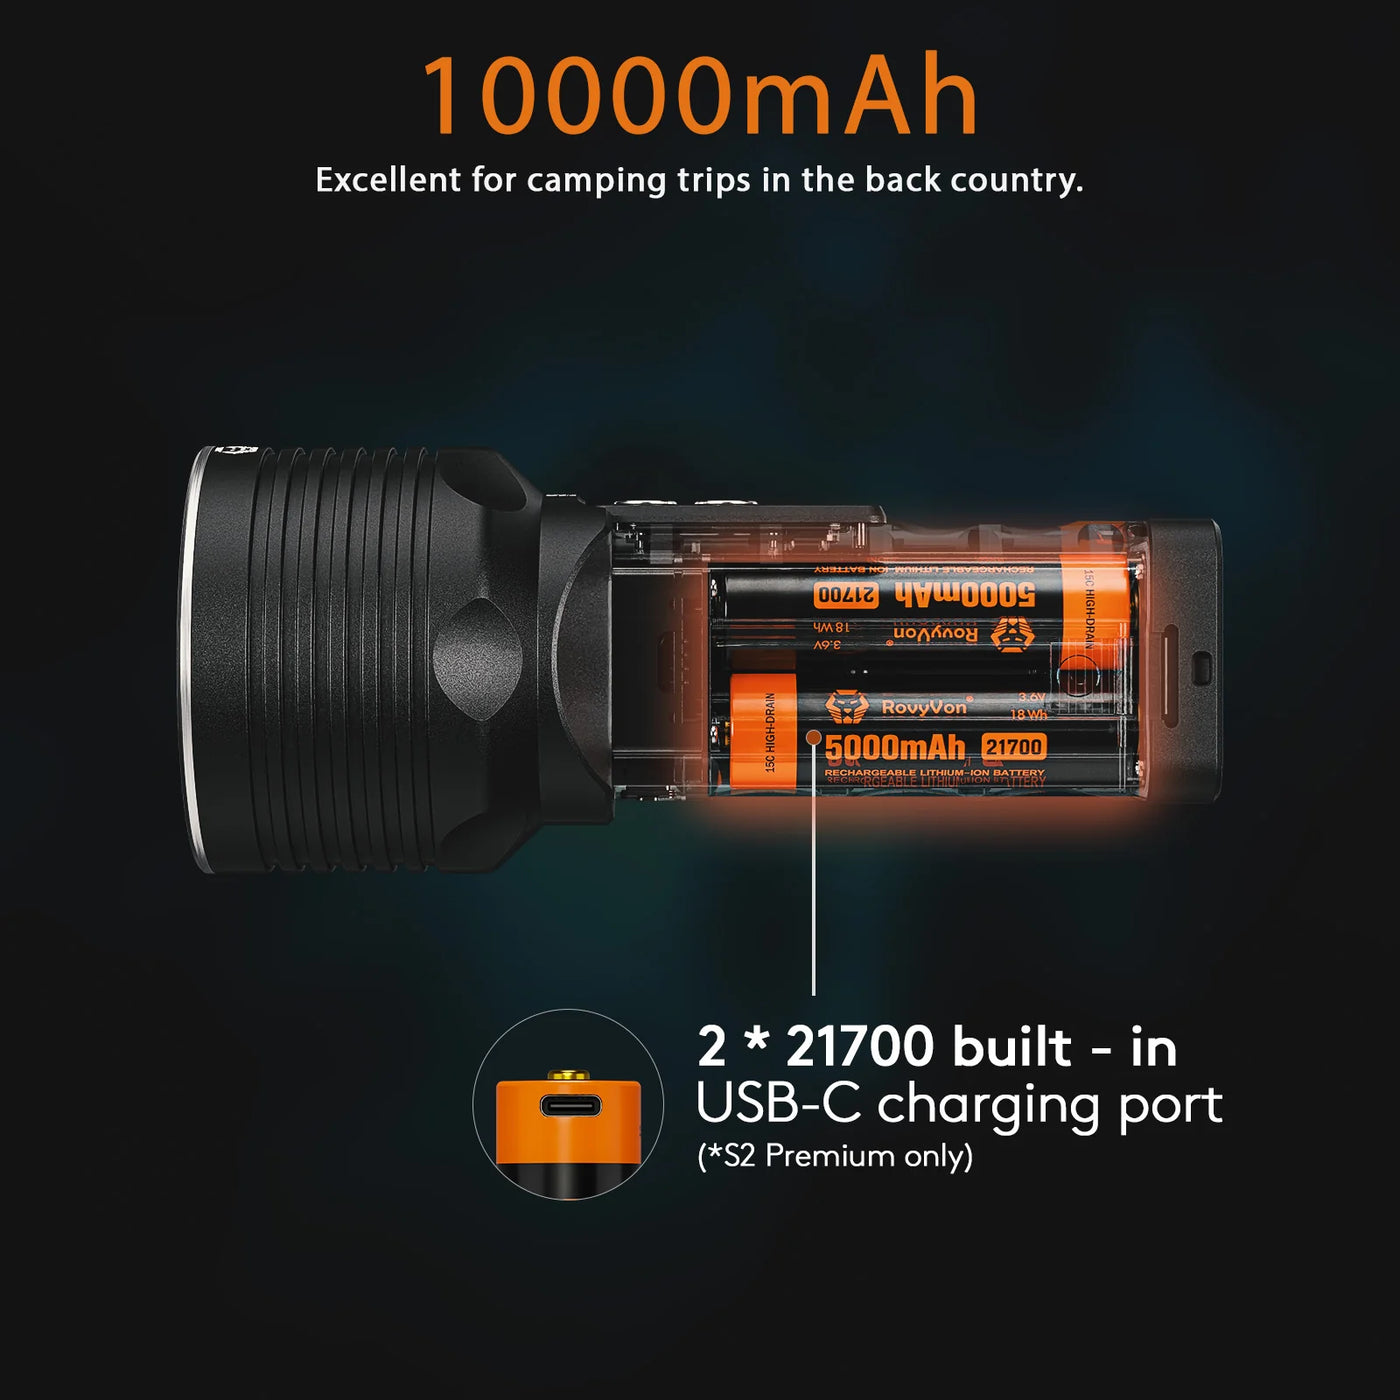 S2 10000 lumens Search Flashlight